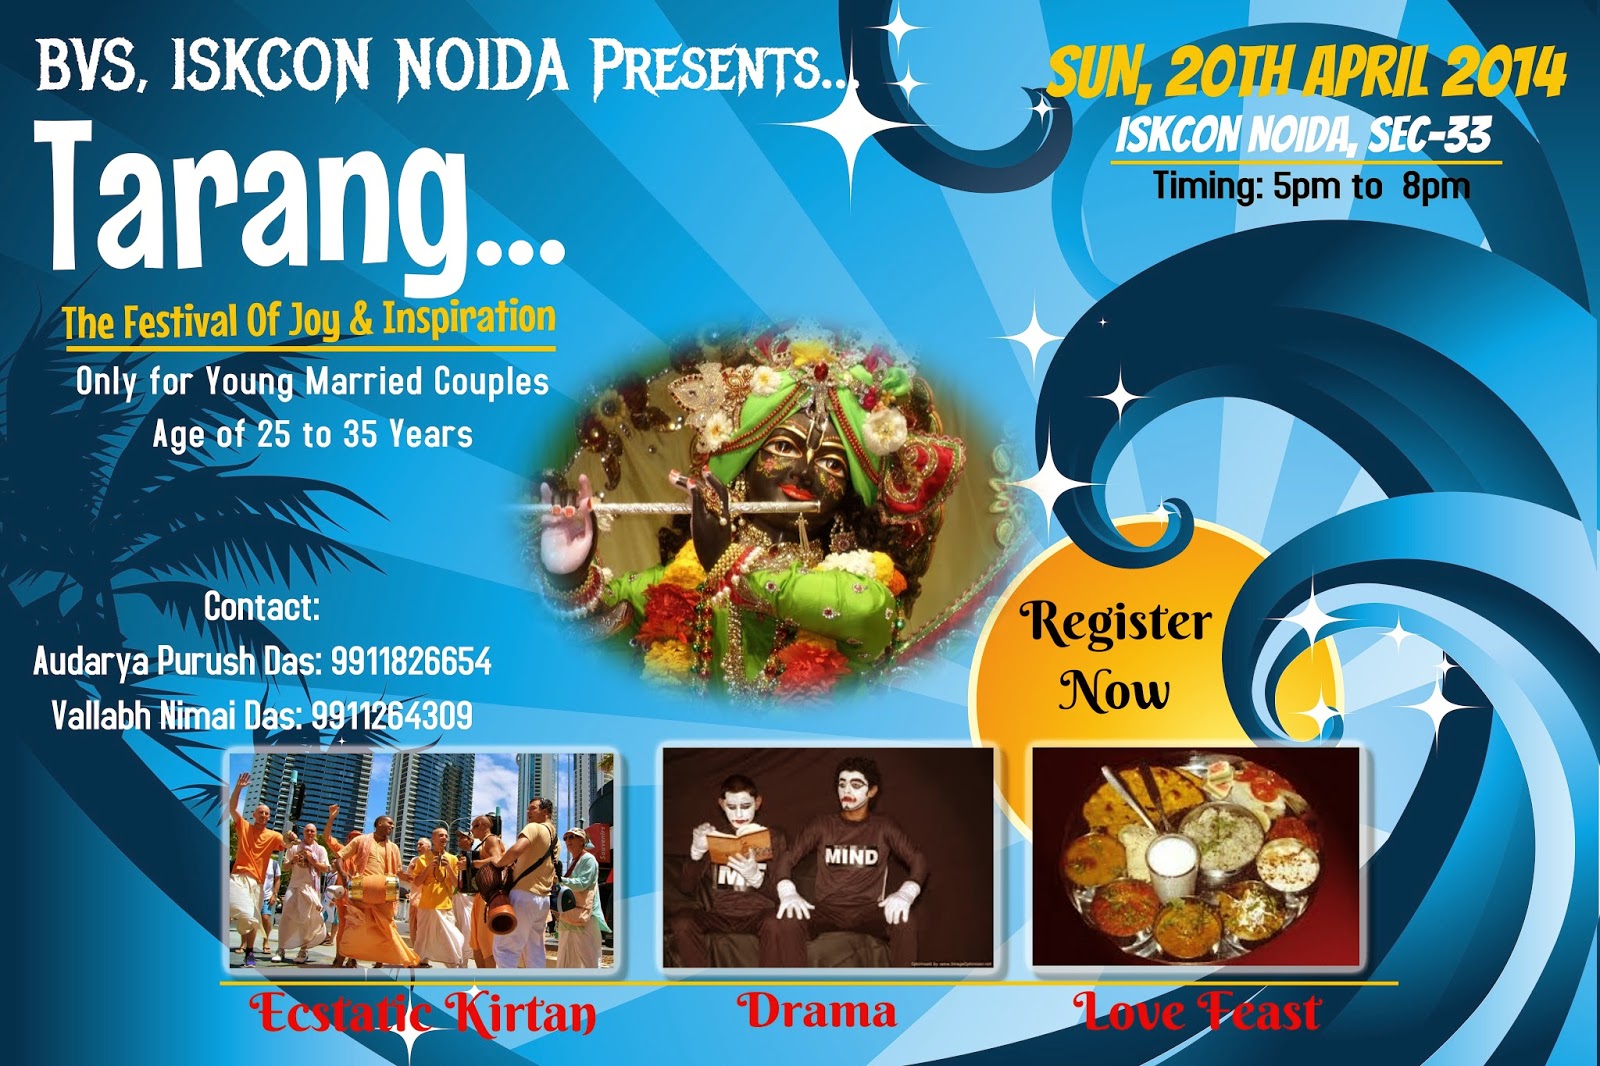 Bhakti Vinod Sabha (Noida): BVS Iskcon Noida Invites you all for ...